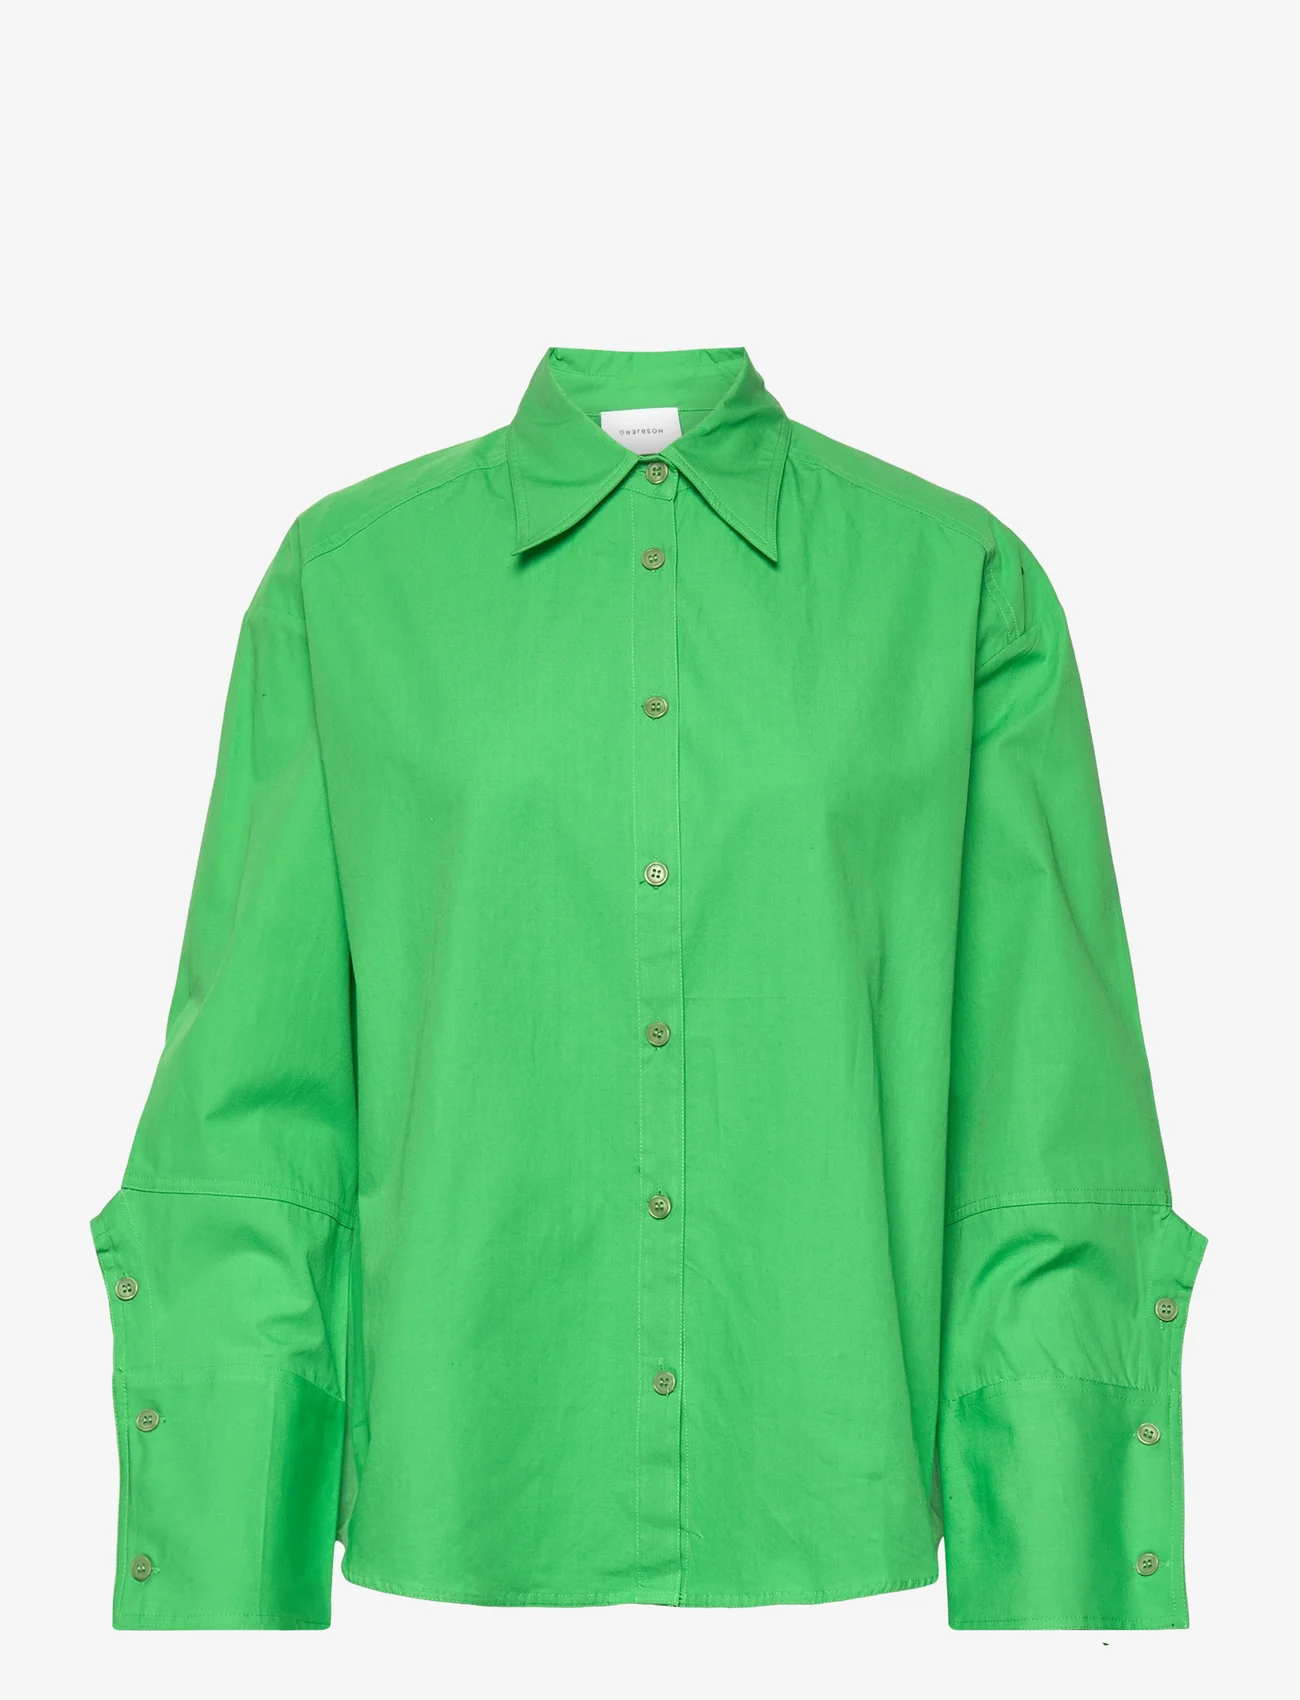 Hosbjerg - Ipana Cotton Shirt - green - 0